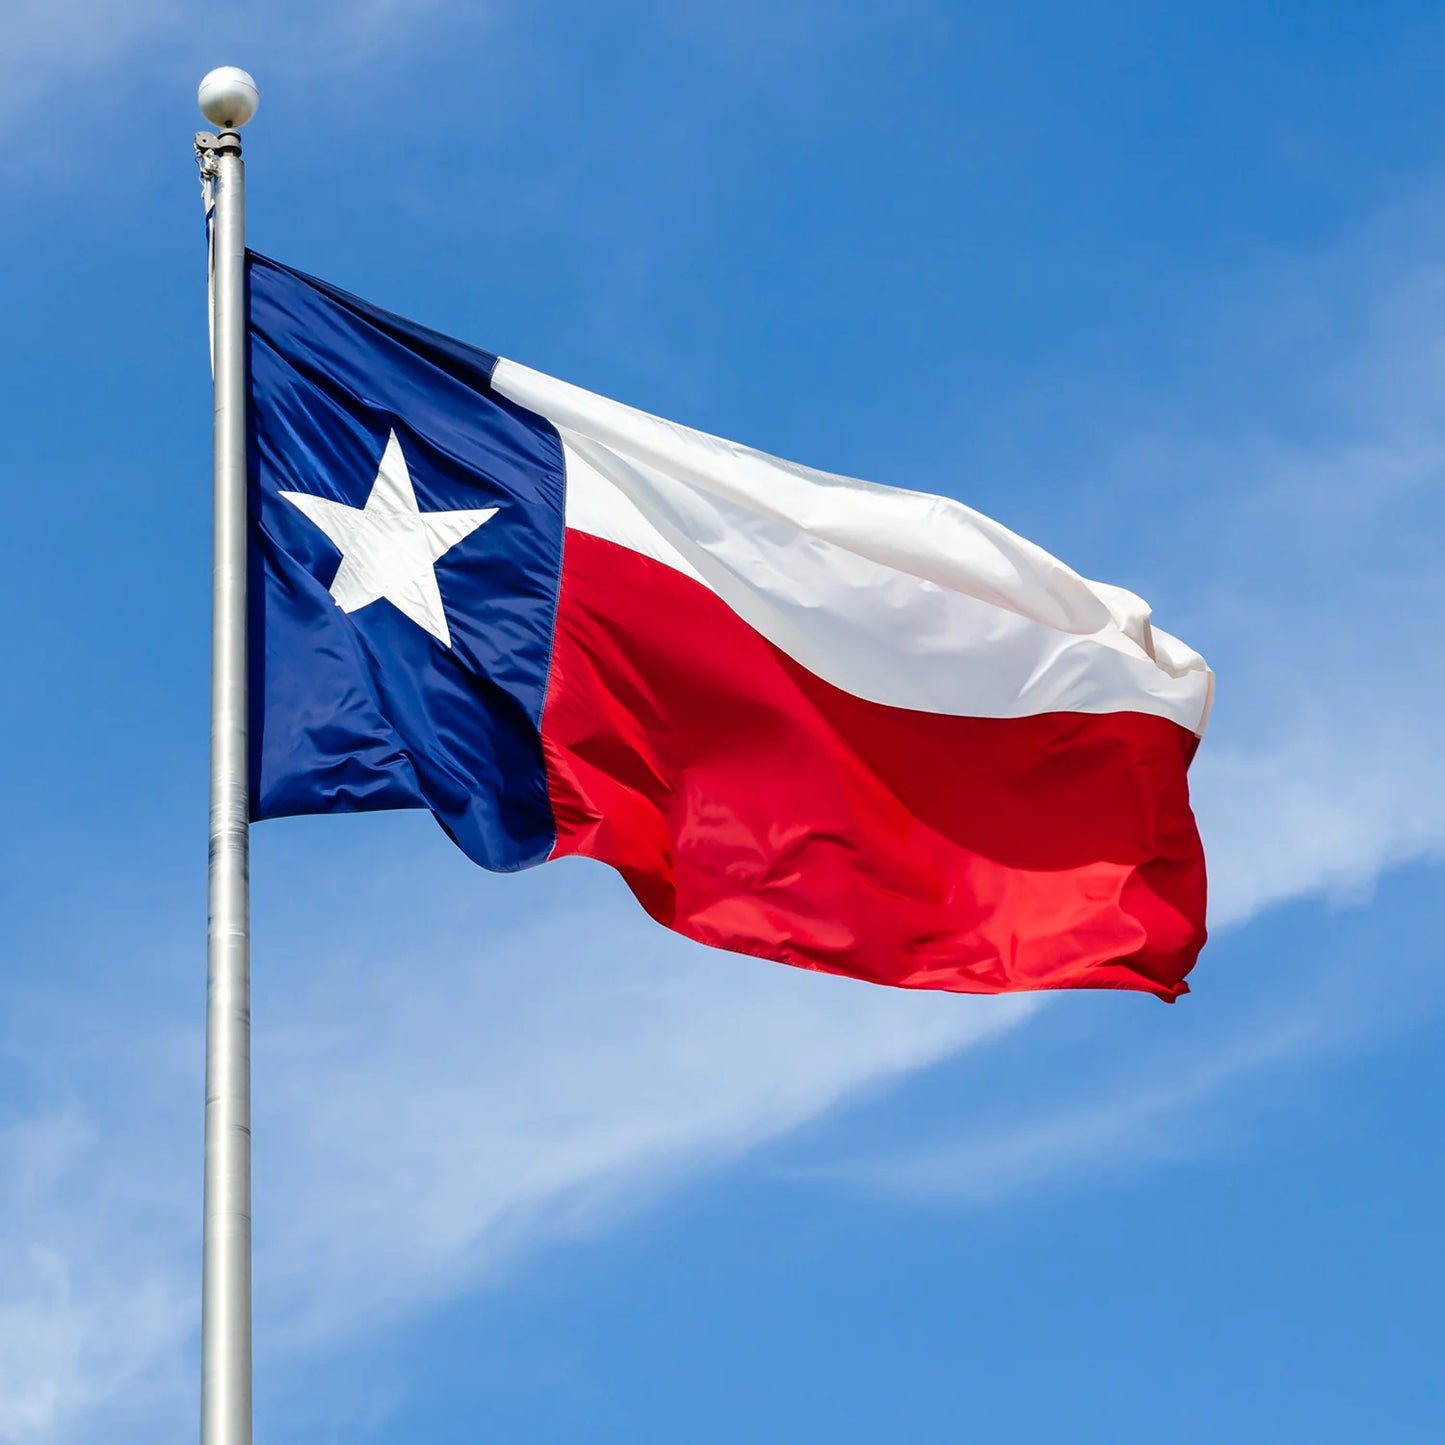 6' x 10' Texas Flag - 2 Ply Polyester (USA MADE)